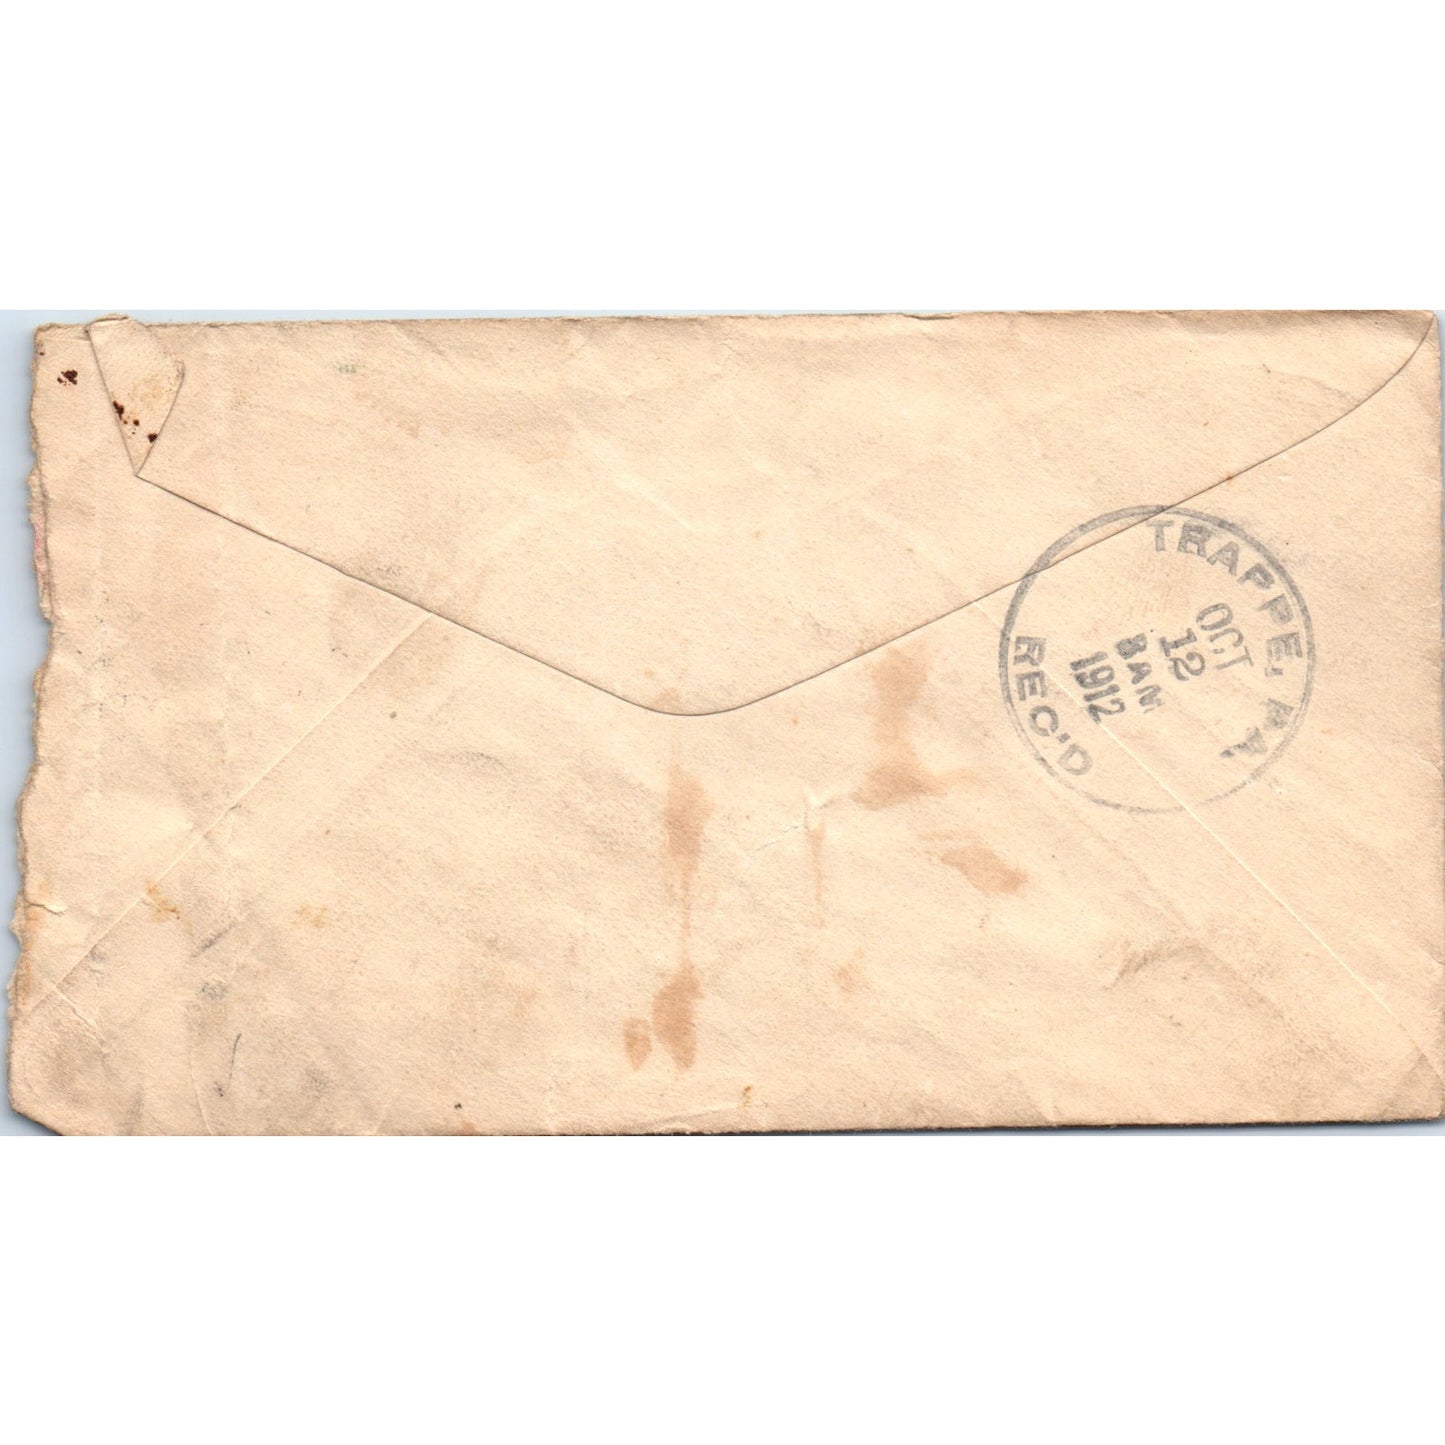 1912 West Stockbridge Marble Works Co Lee MA Postal Cover Envelope TG7-PC2